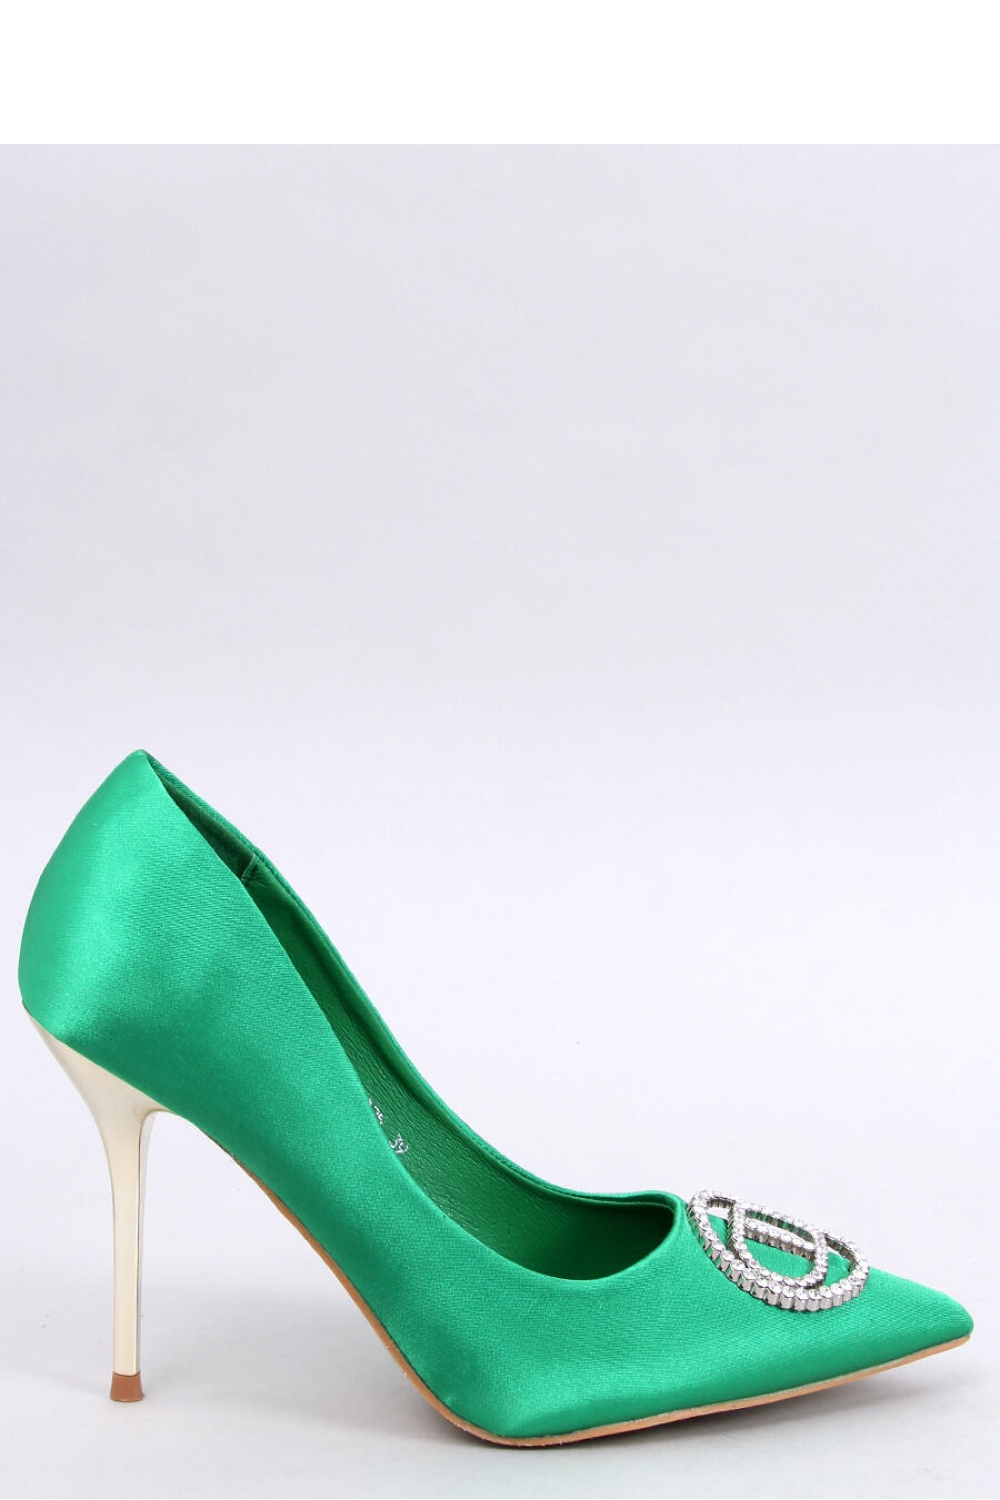 Strappy high heels model 19327..